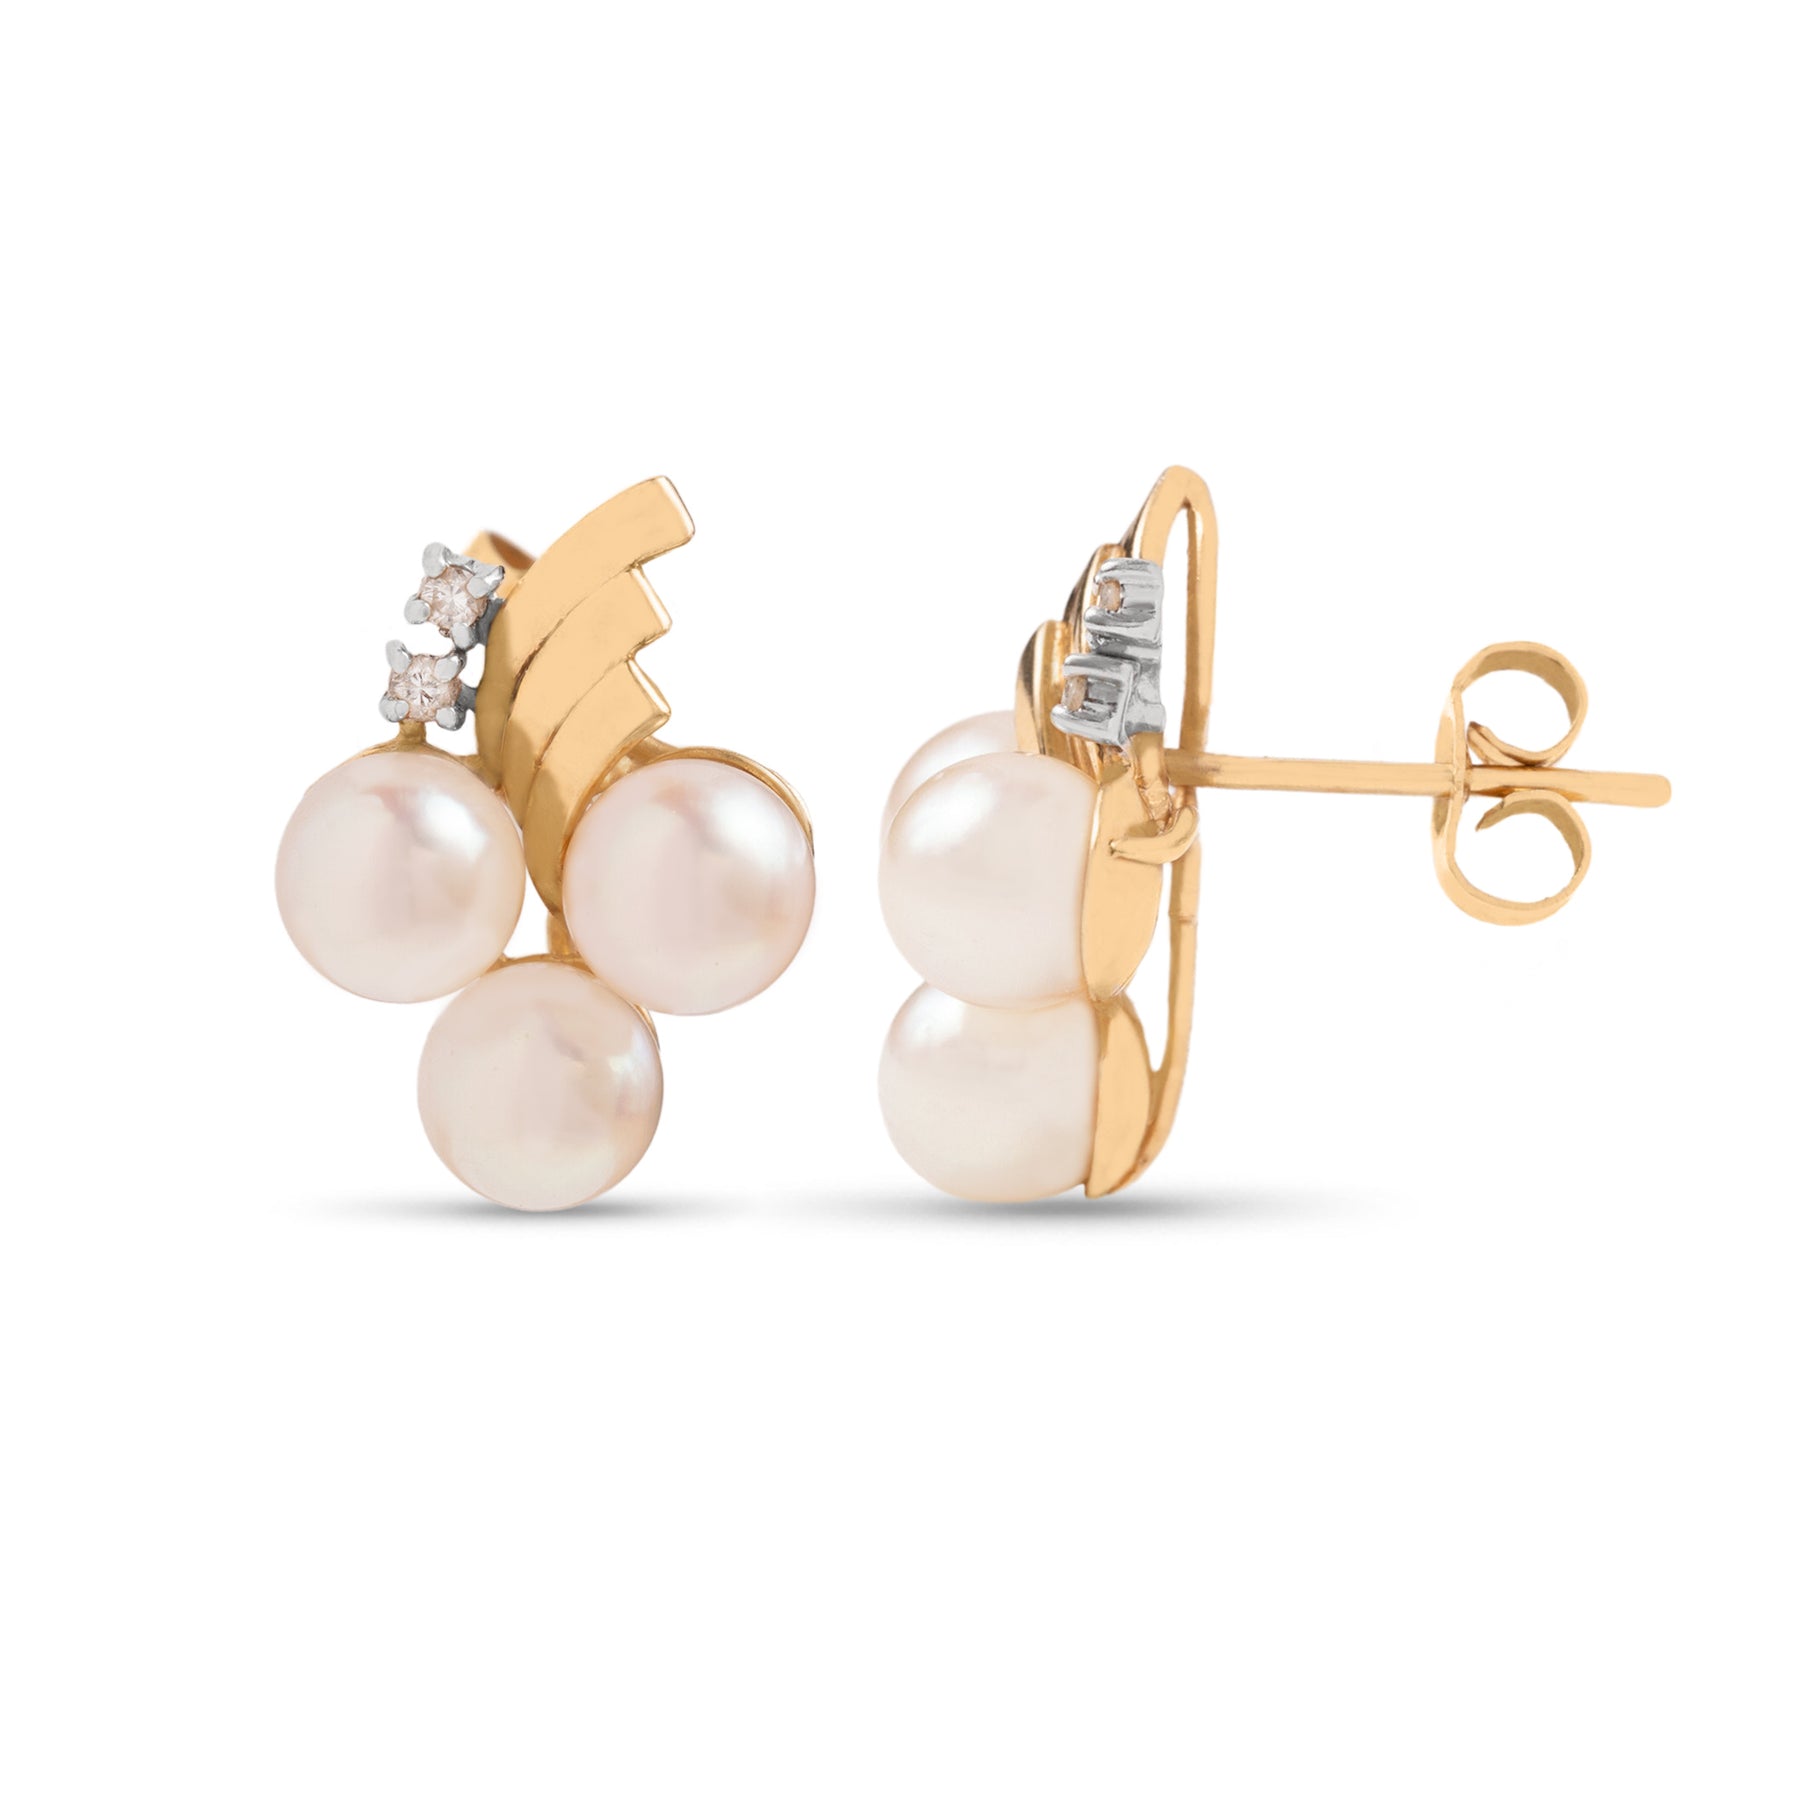 14k yellow gold estate pearl and diamond earrings